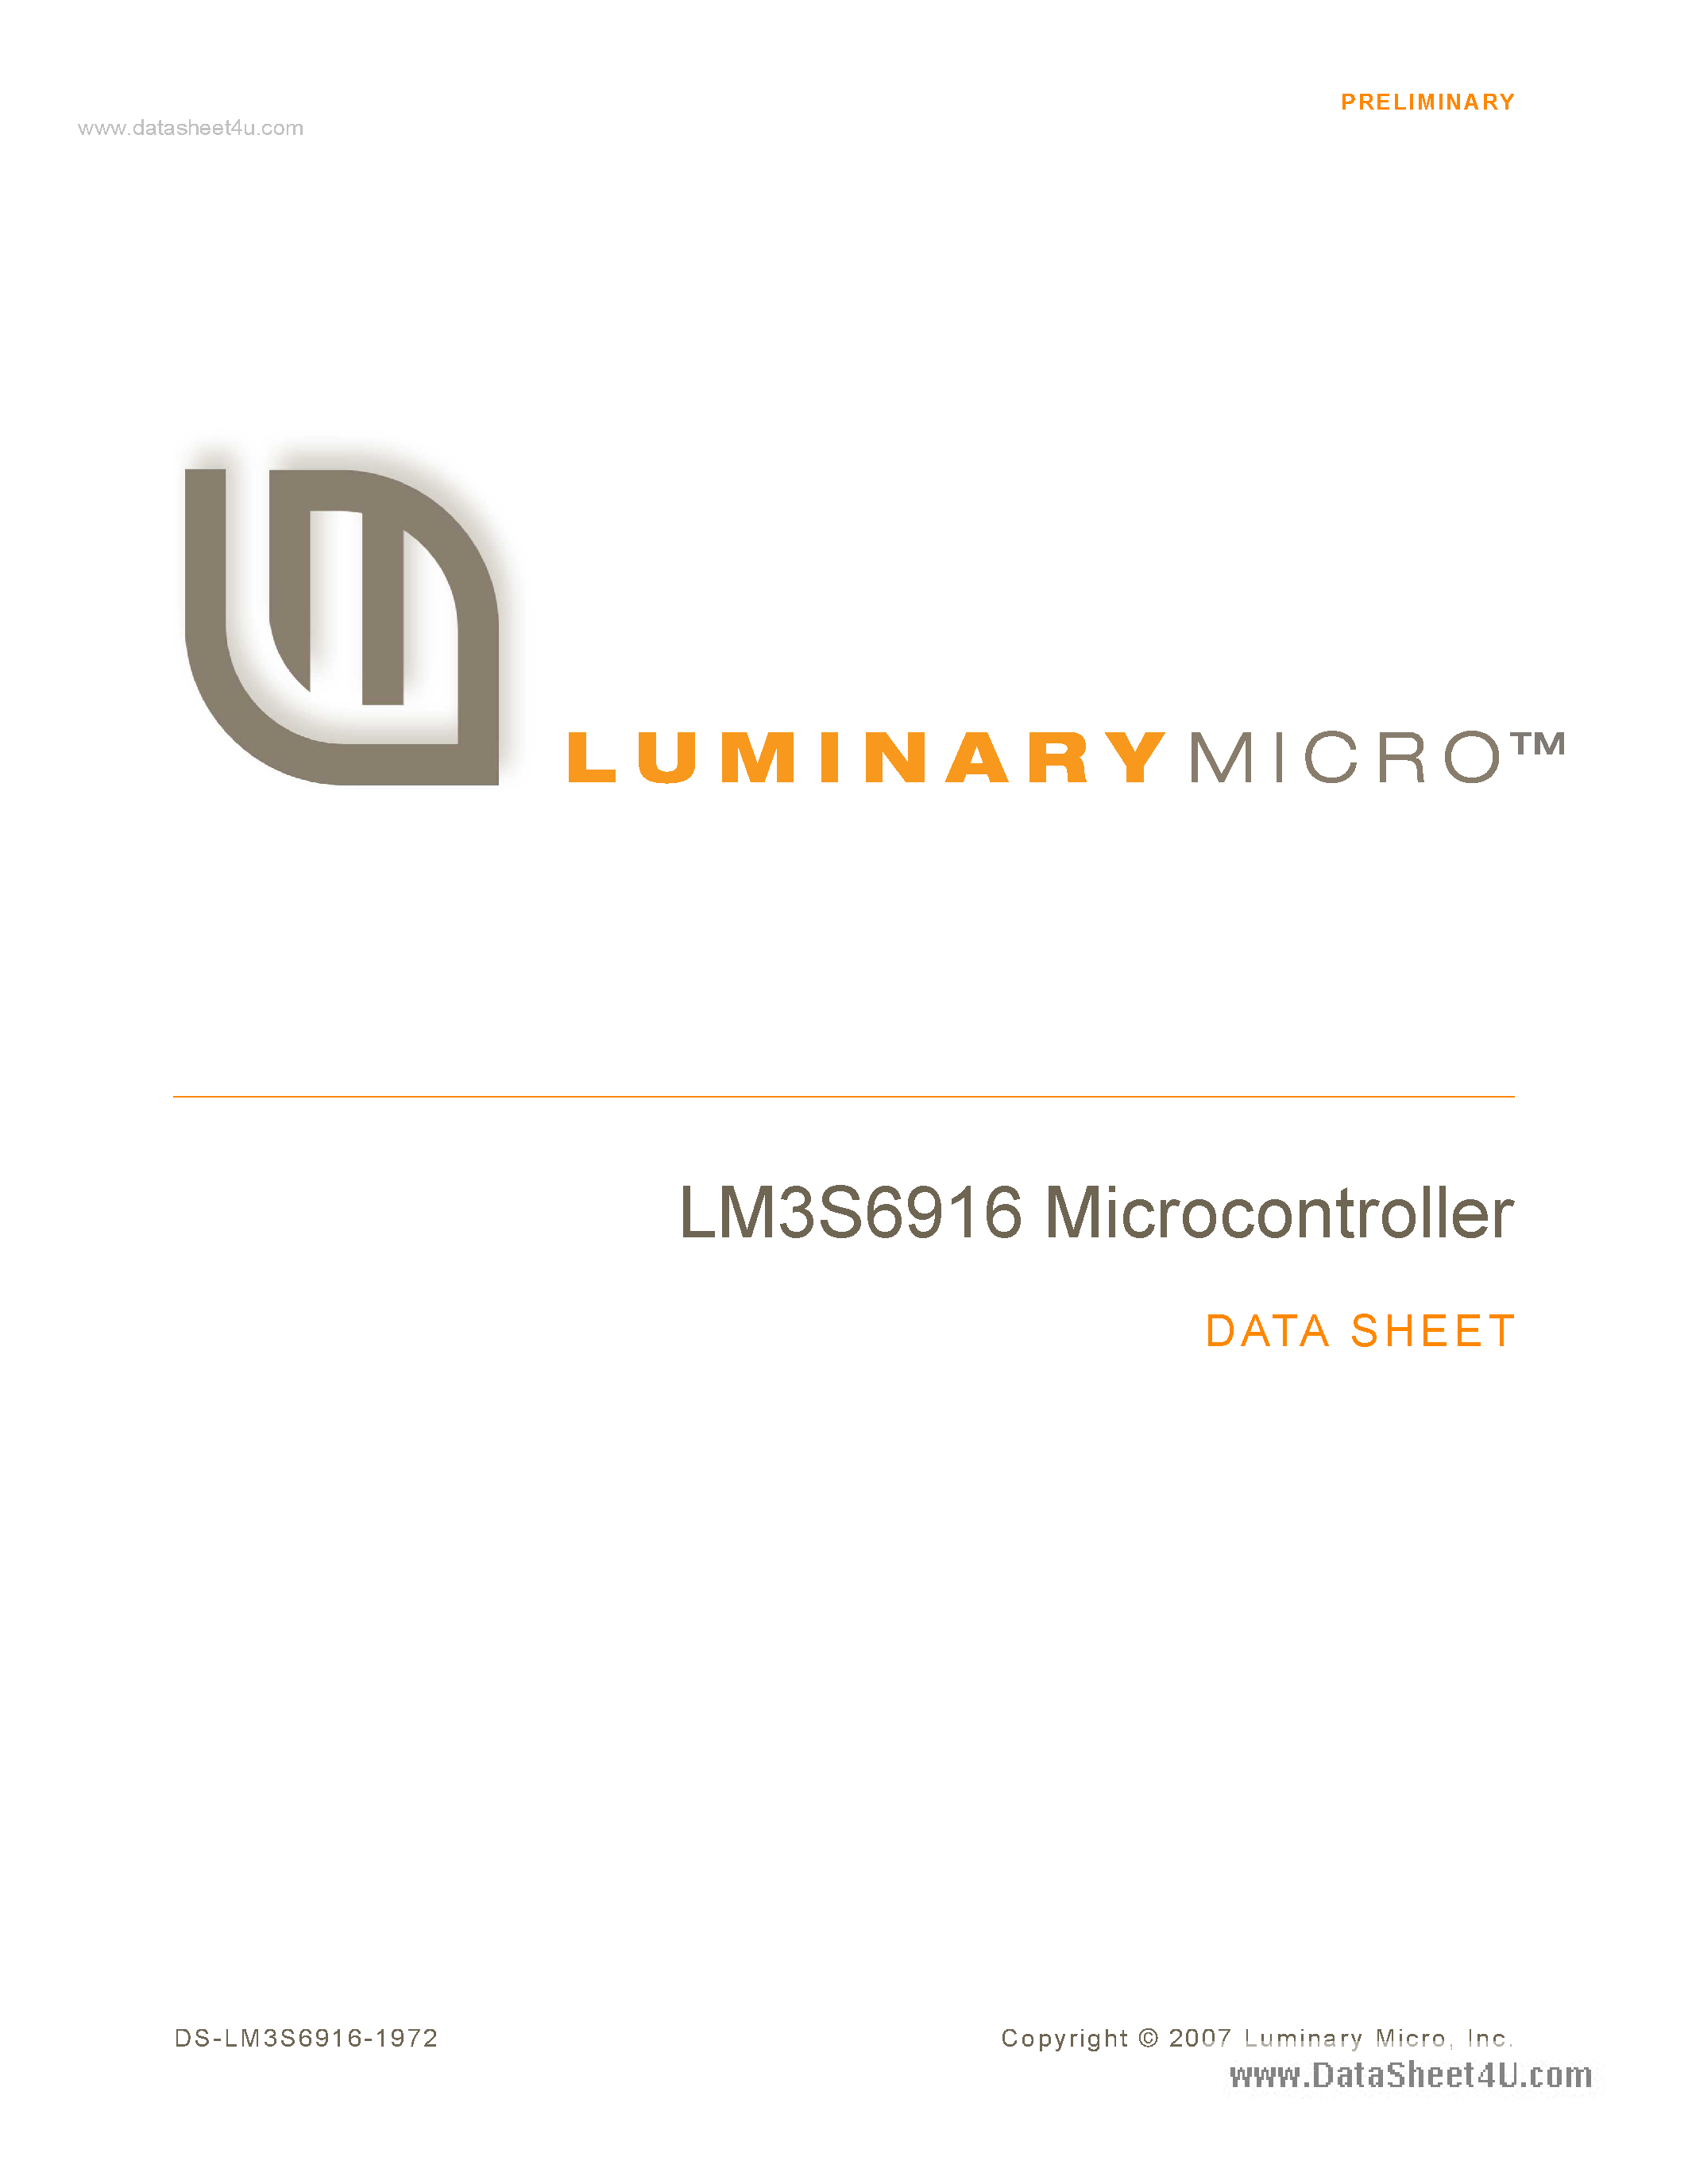 Даташит LM3S6916 - Microcontroller страница 1